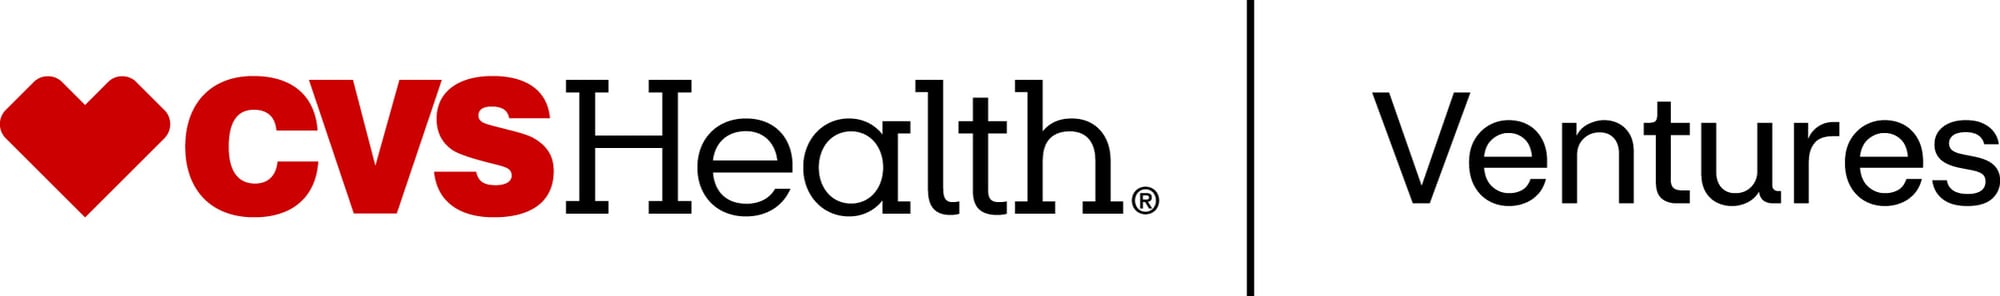 CVS_Health_Ventures_logo_h_rgb_redblk